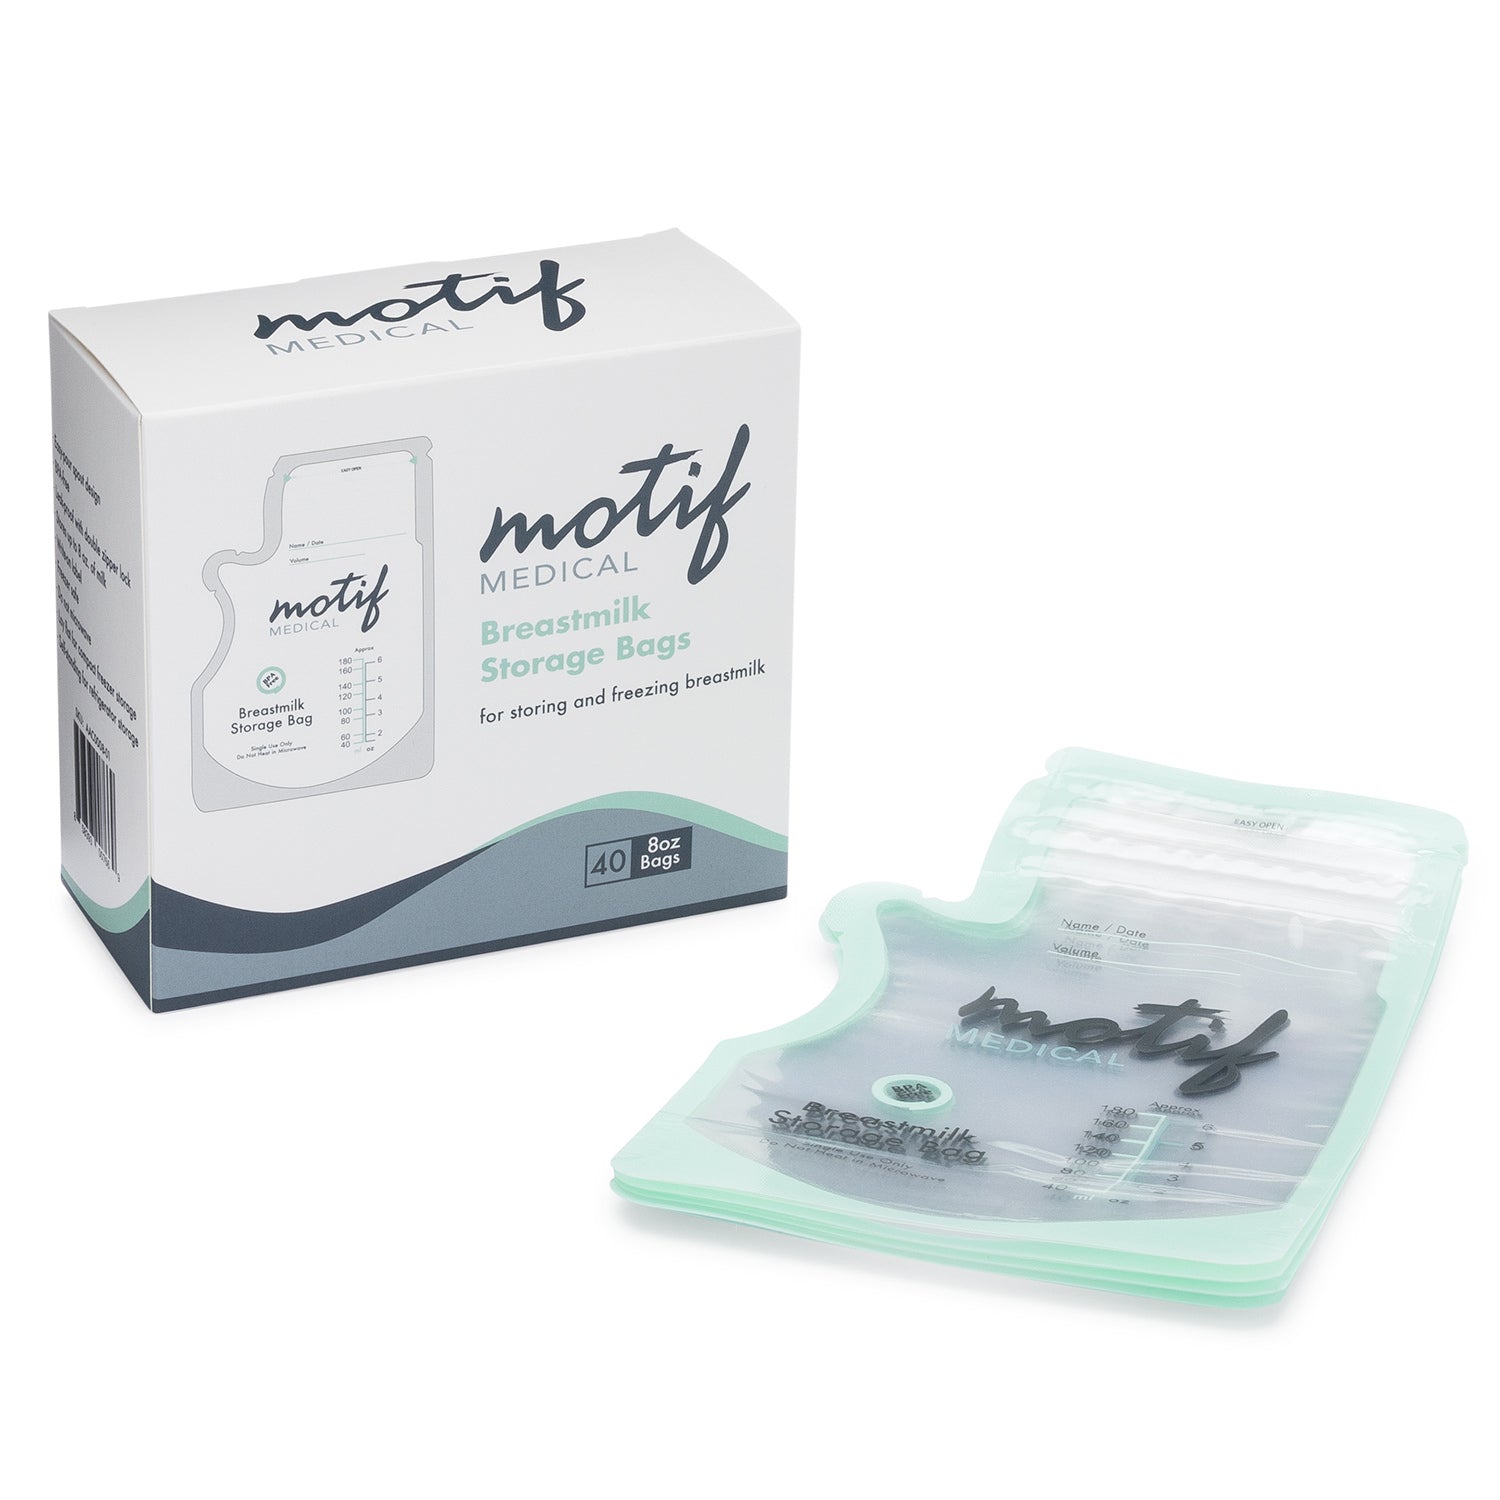 Motif Medical, Soothing Hydrogel Nipple Pads, for Nursing Moms